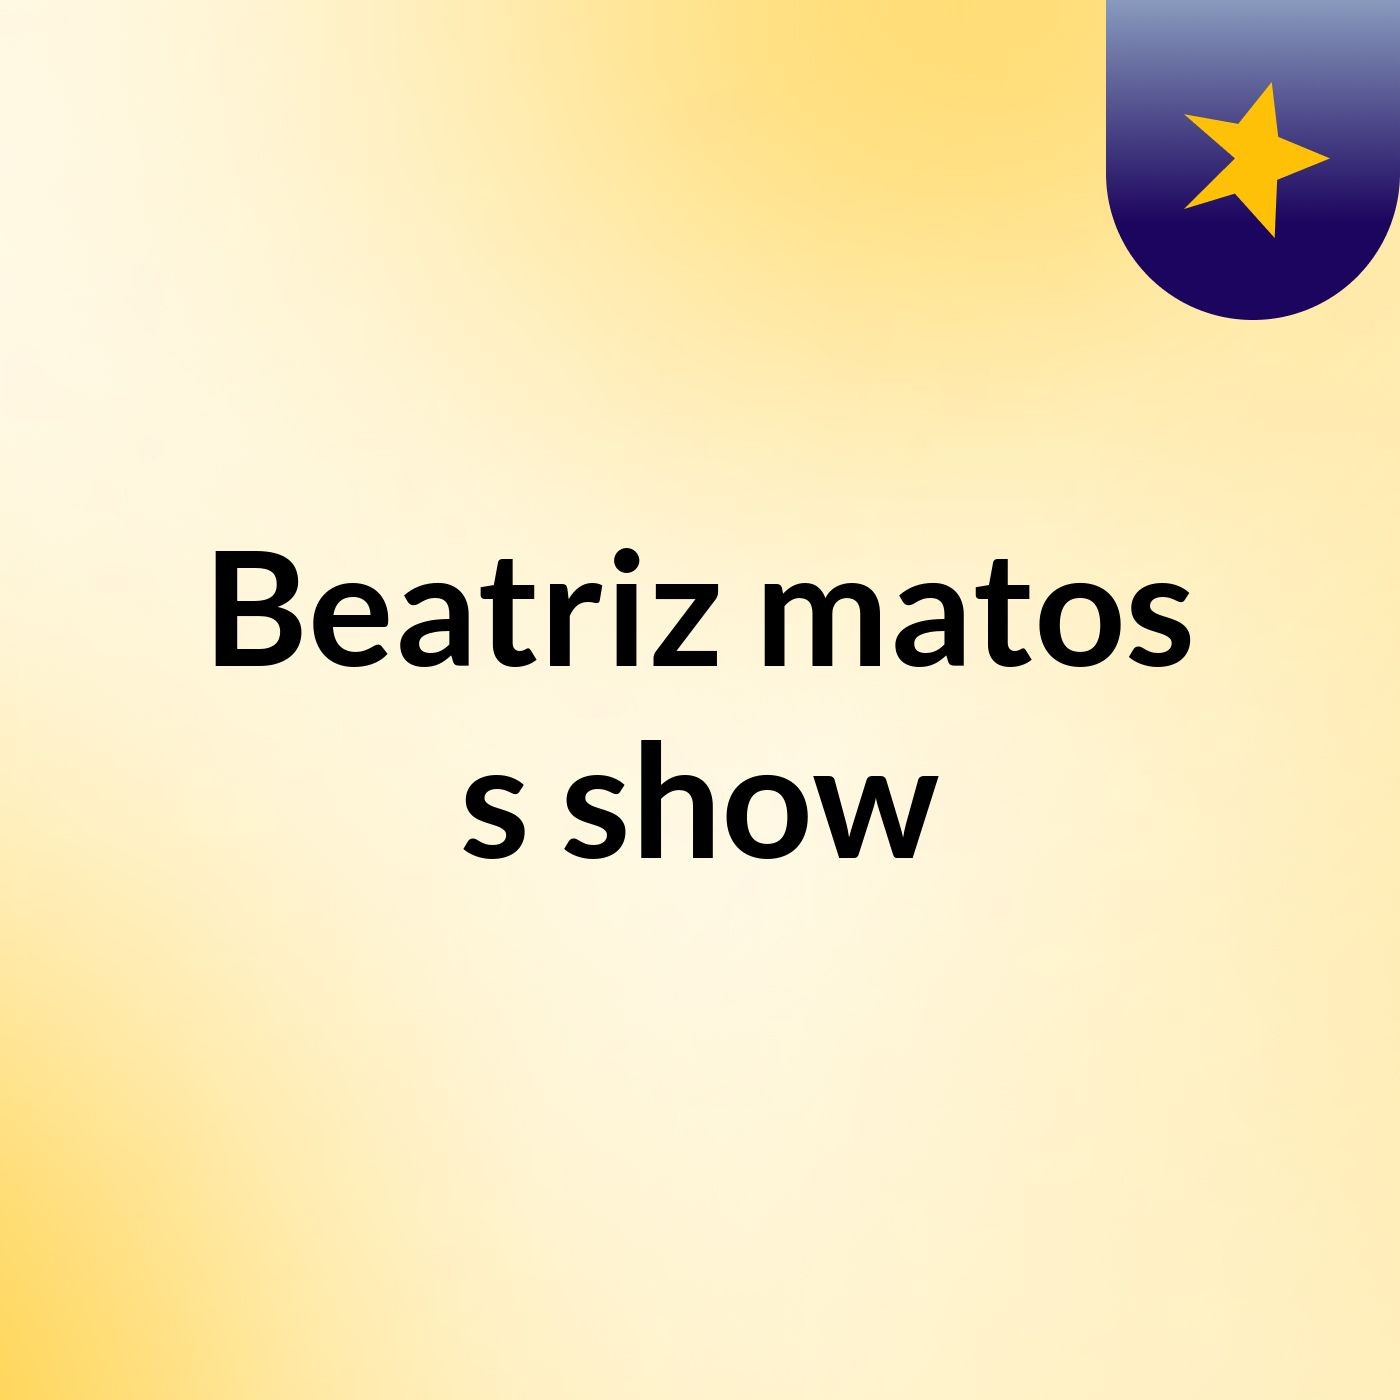 Beatriz matos's show